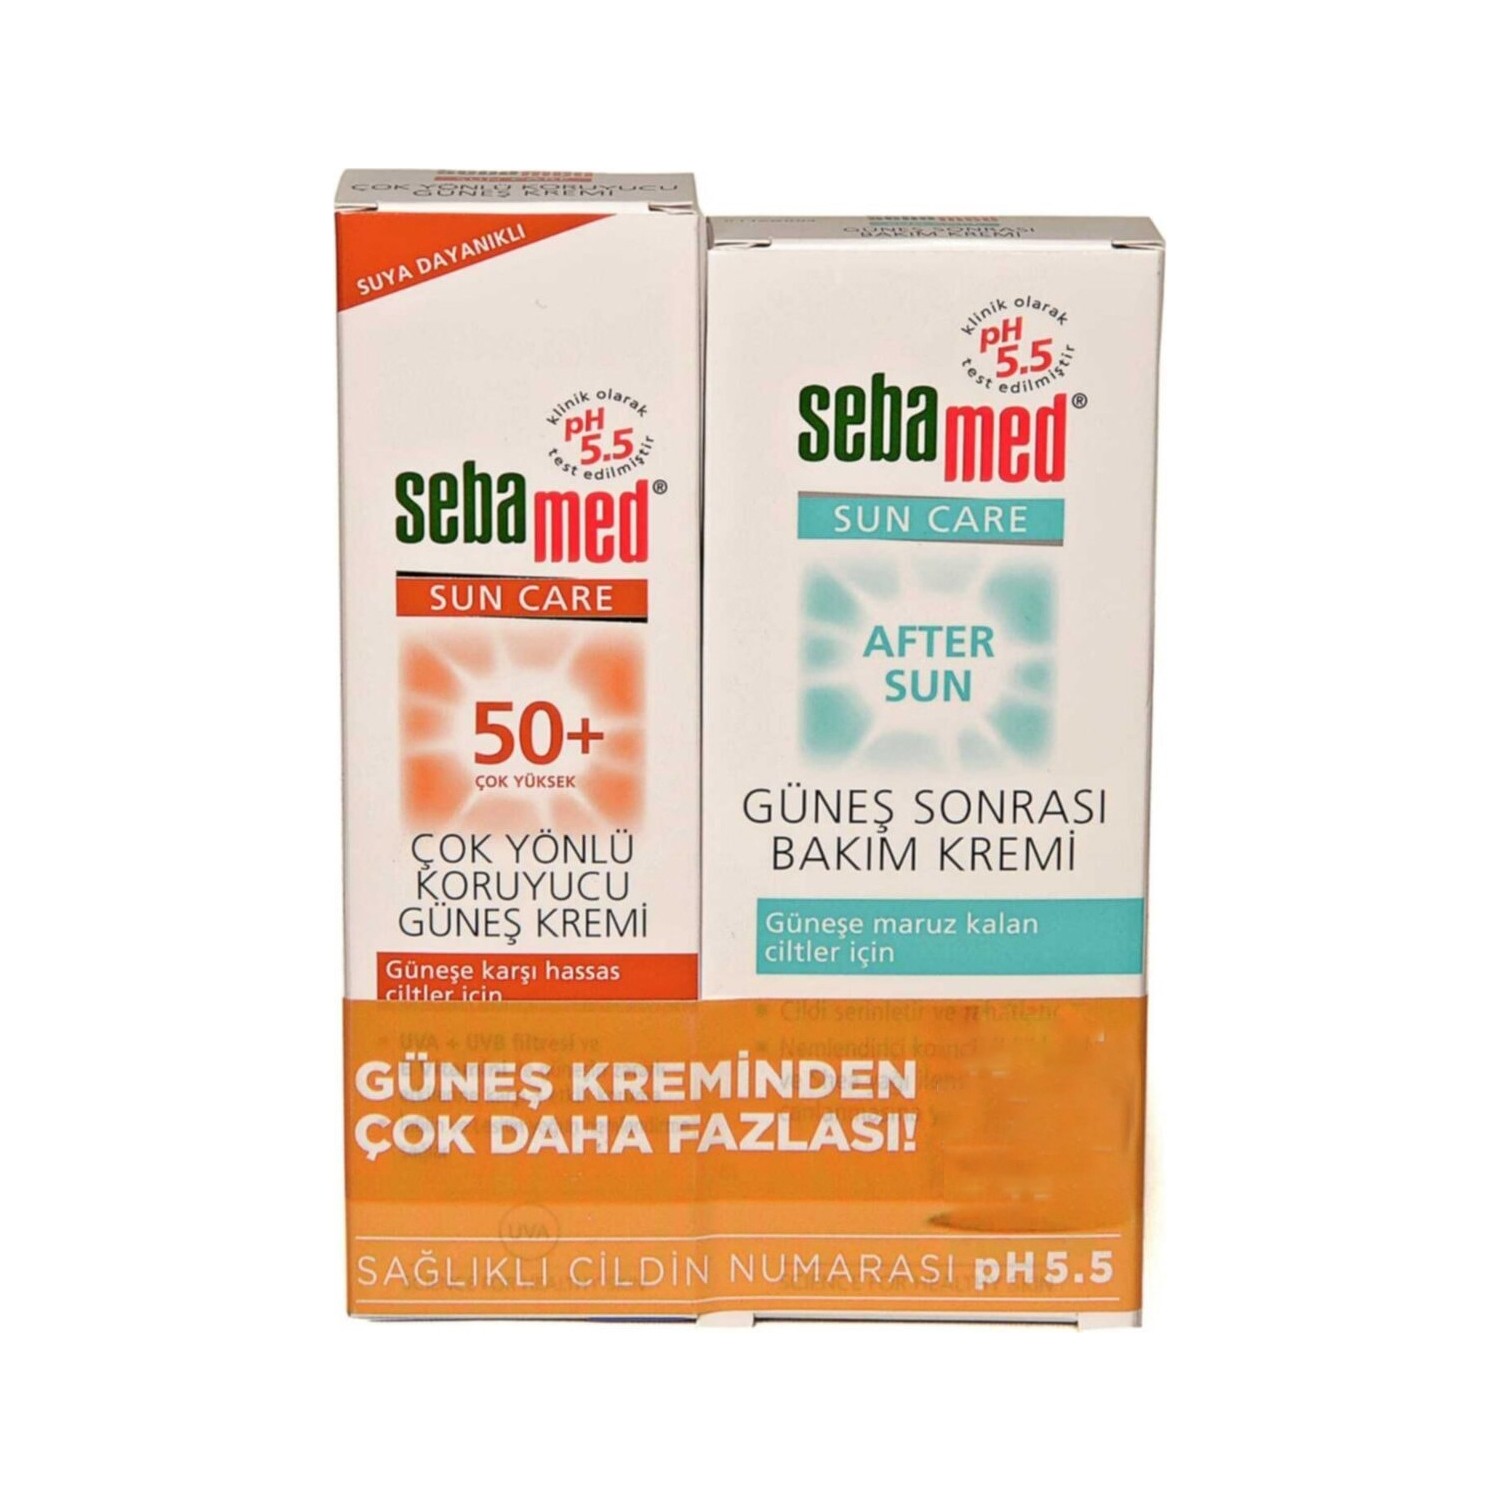 Солнцезащитный крем Sebamed Sun Care SPF 50+, 100 мл глобальный антивозрастной защитный крем spf 50 sisley sunleya g e age minimizing global sun care 50 мл